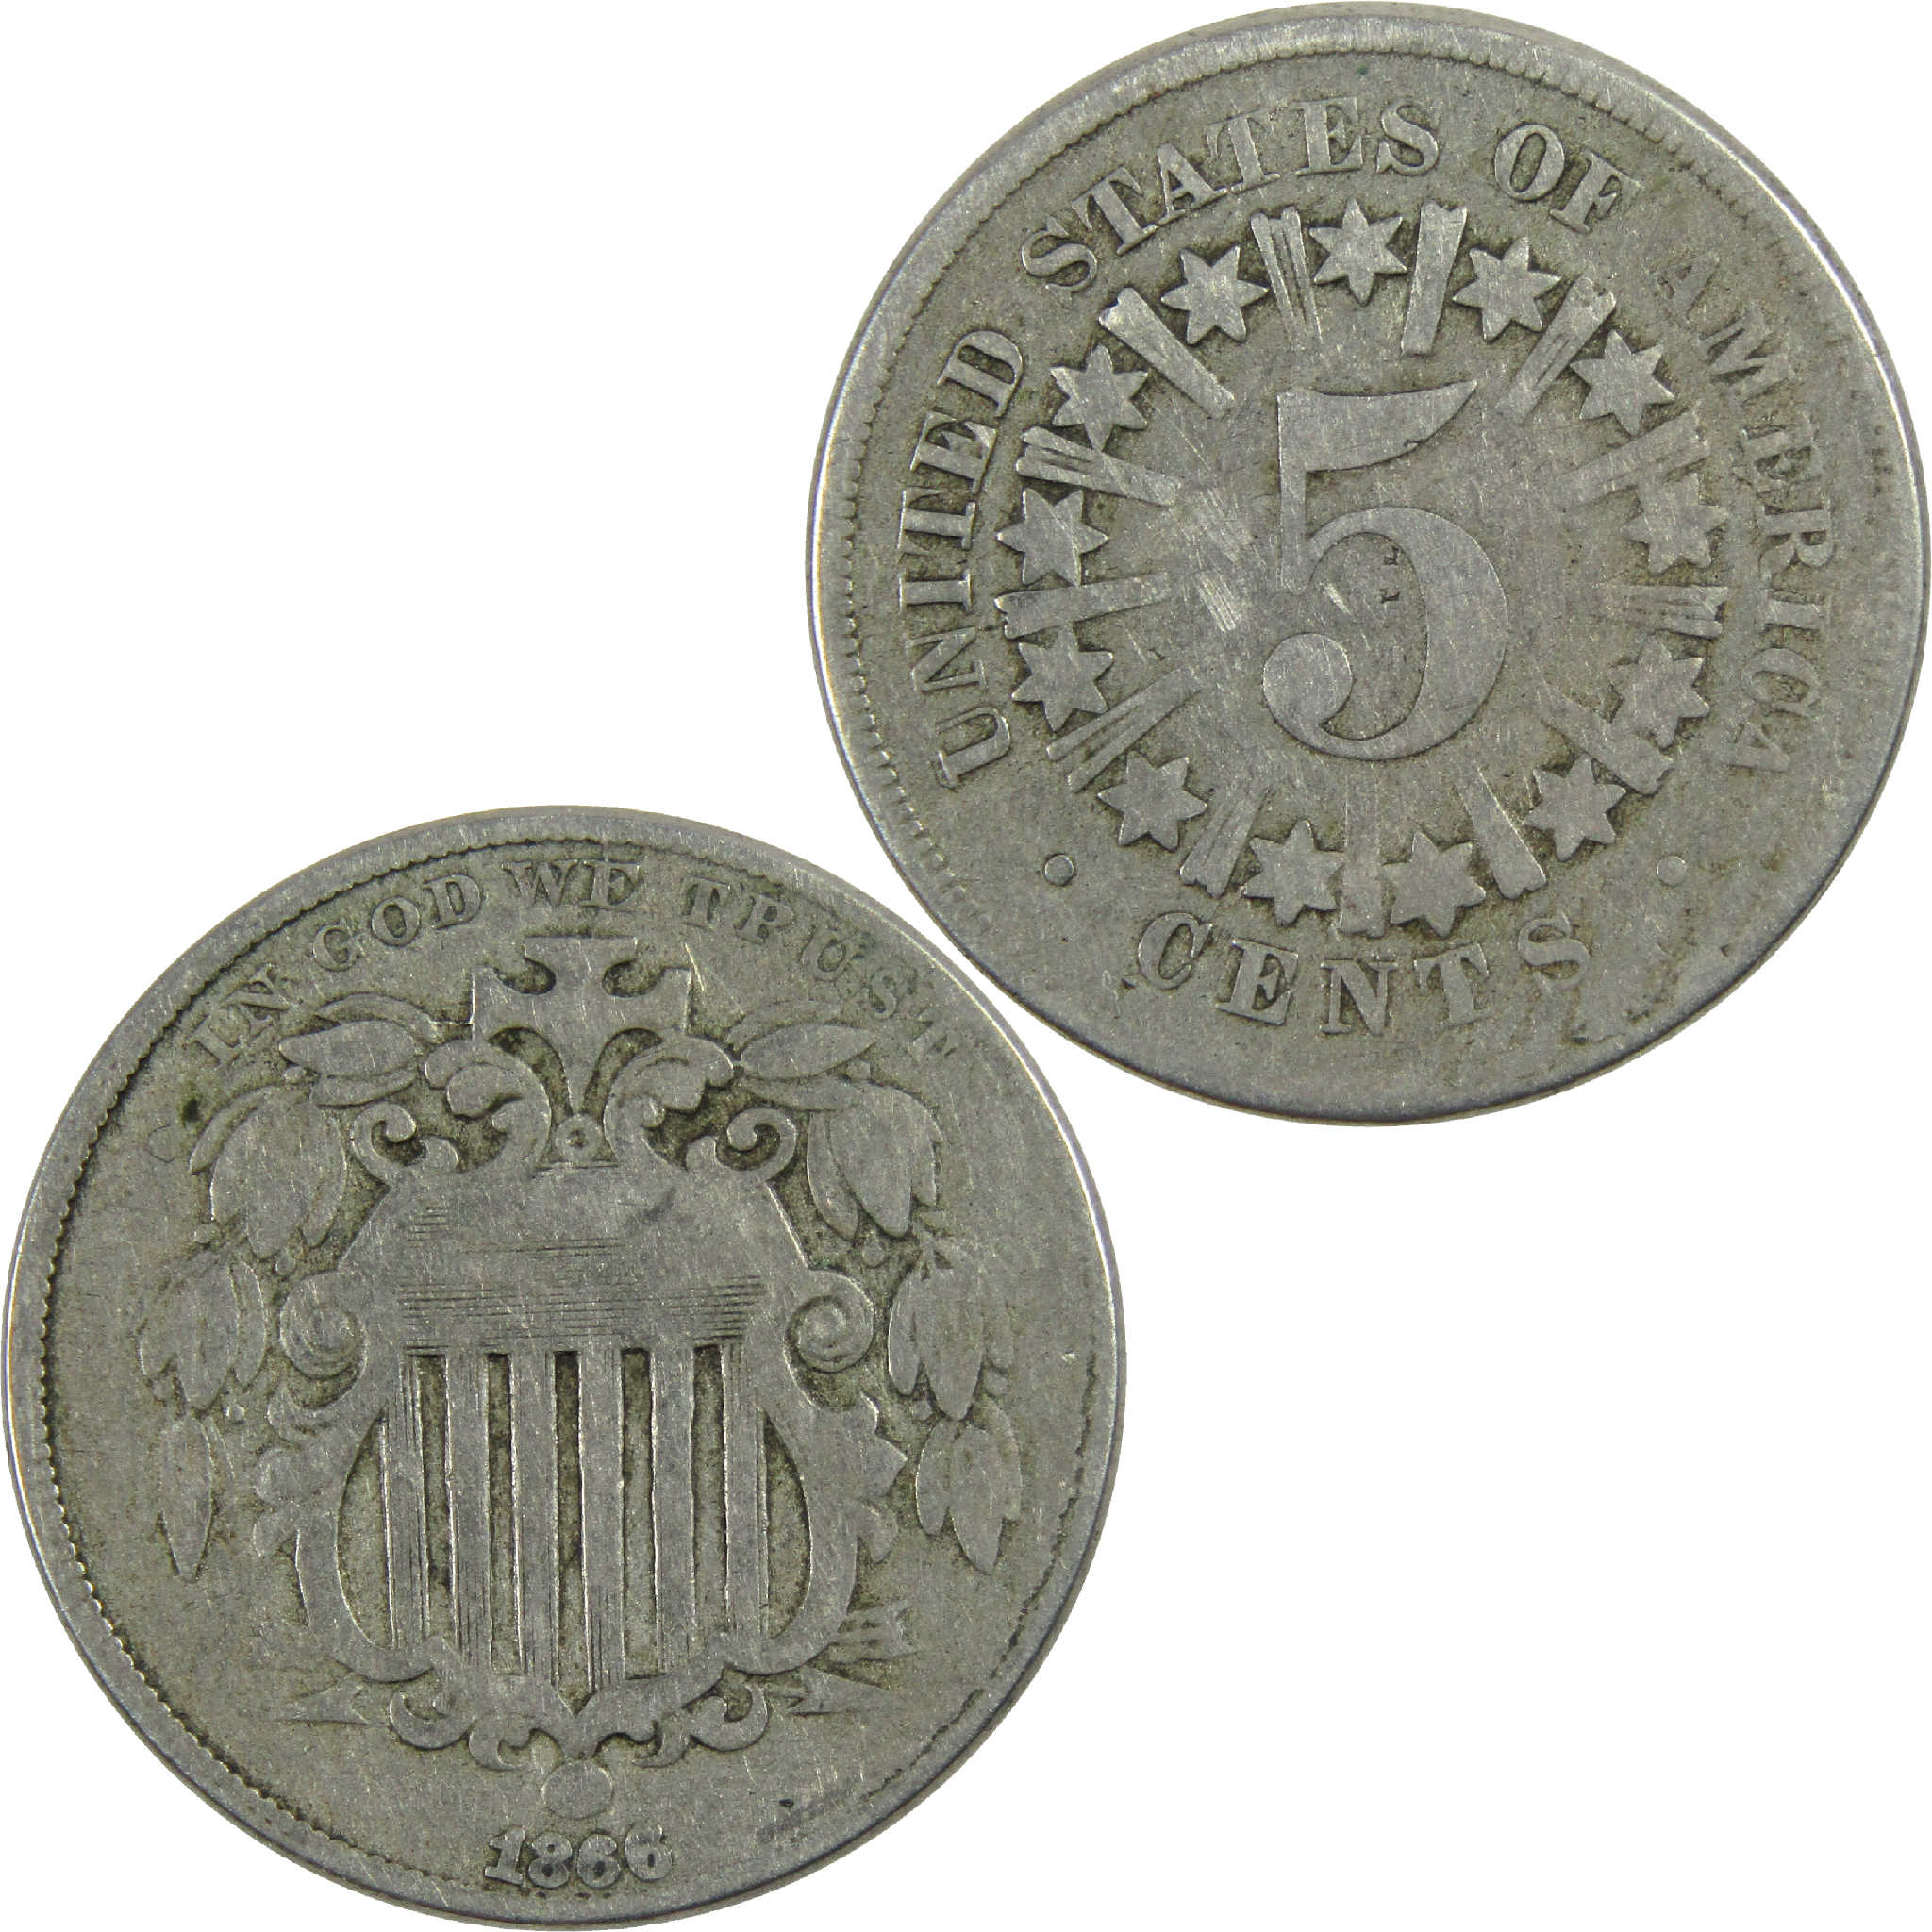 1866 Rays Shield Nickel VG Very Good 5c Coin SKU:I12254